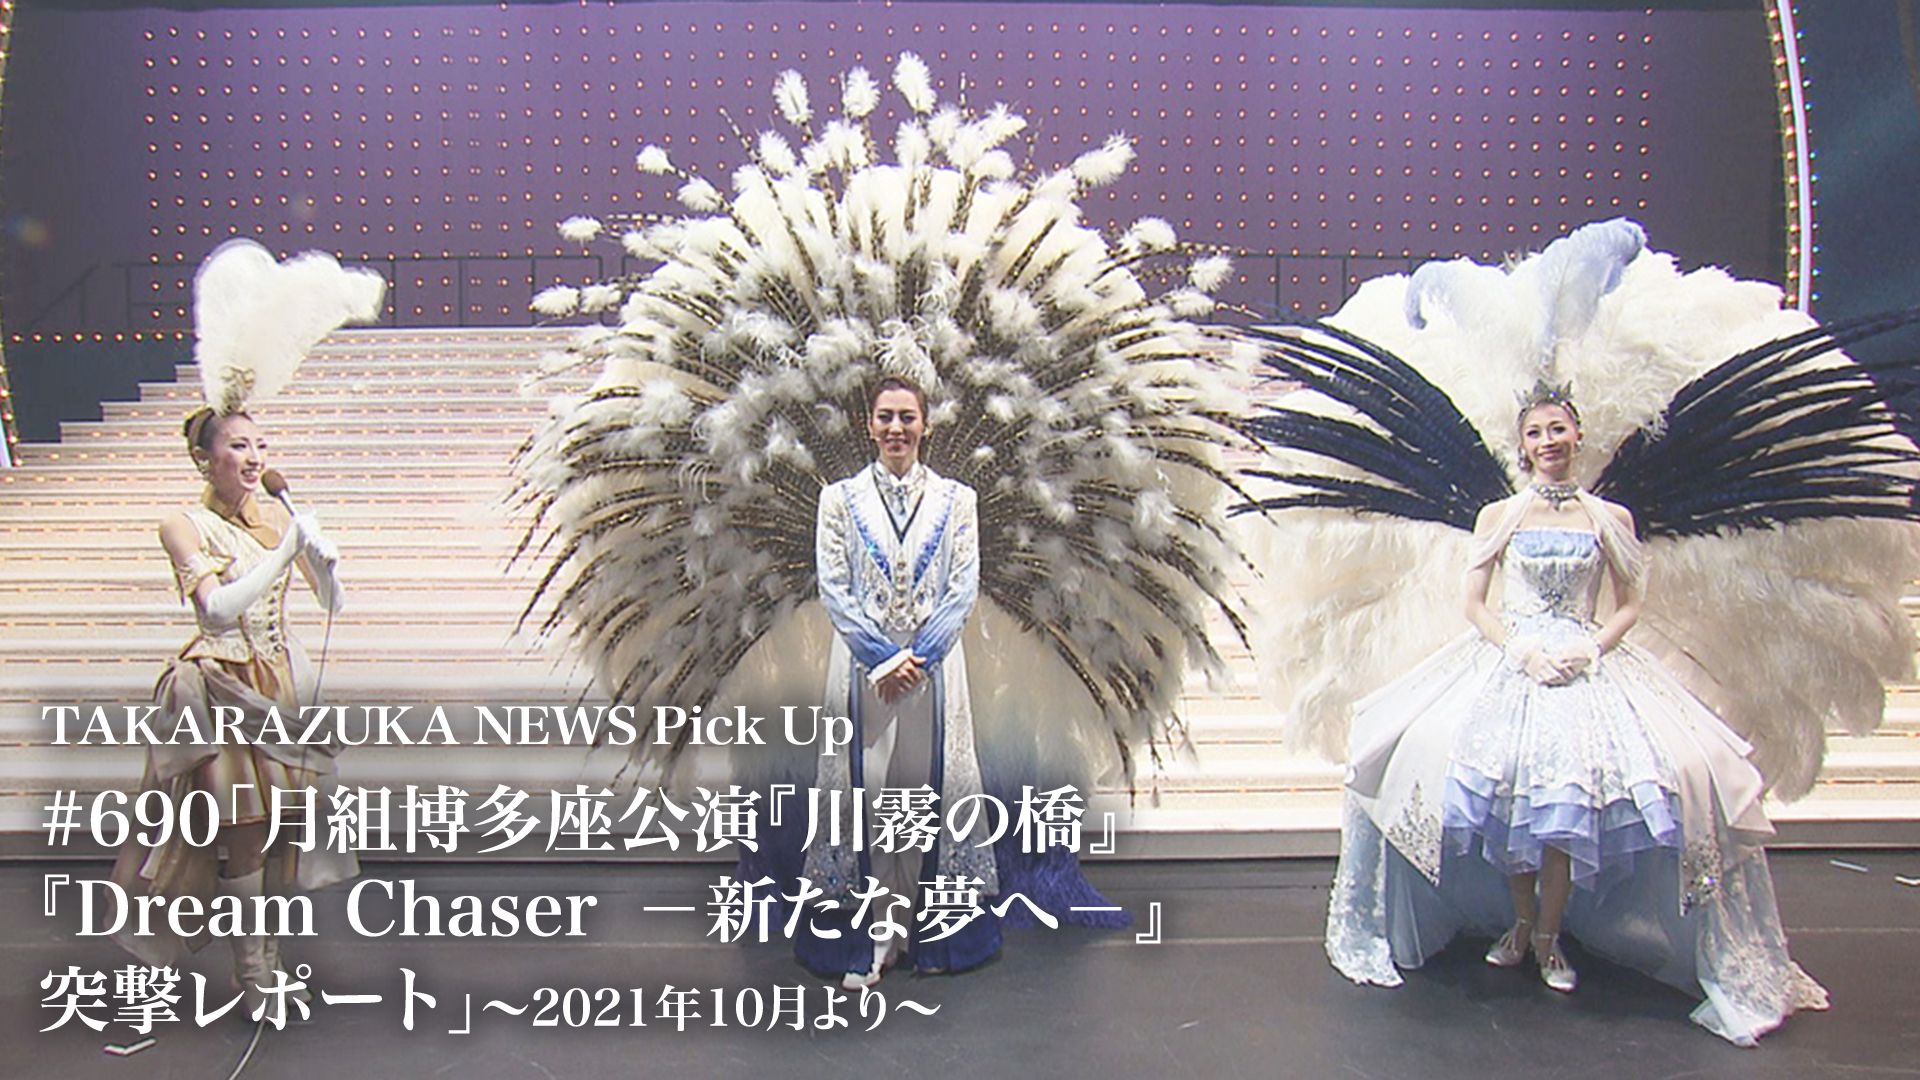 TAKARAZUKA NEWS Pick Up #690「月組博多座公演『川霧の橋』『Dream Chaser -新たな夢へ-』突撃レポート」